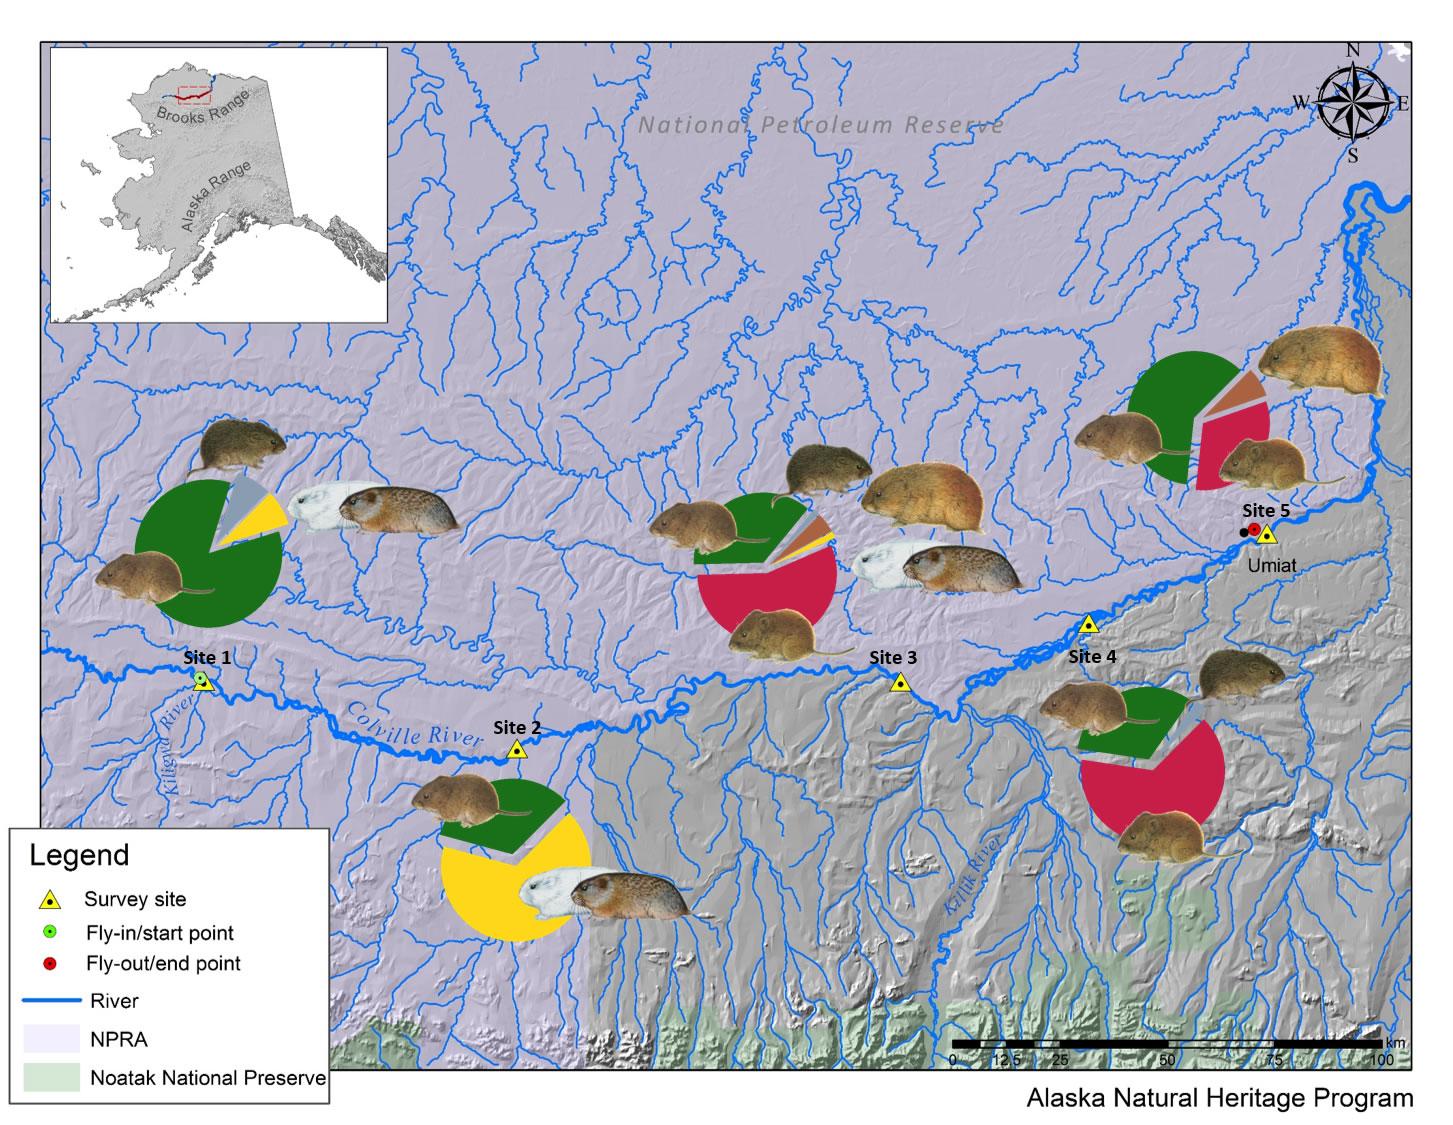 small mammal diversity along the Colville River